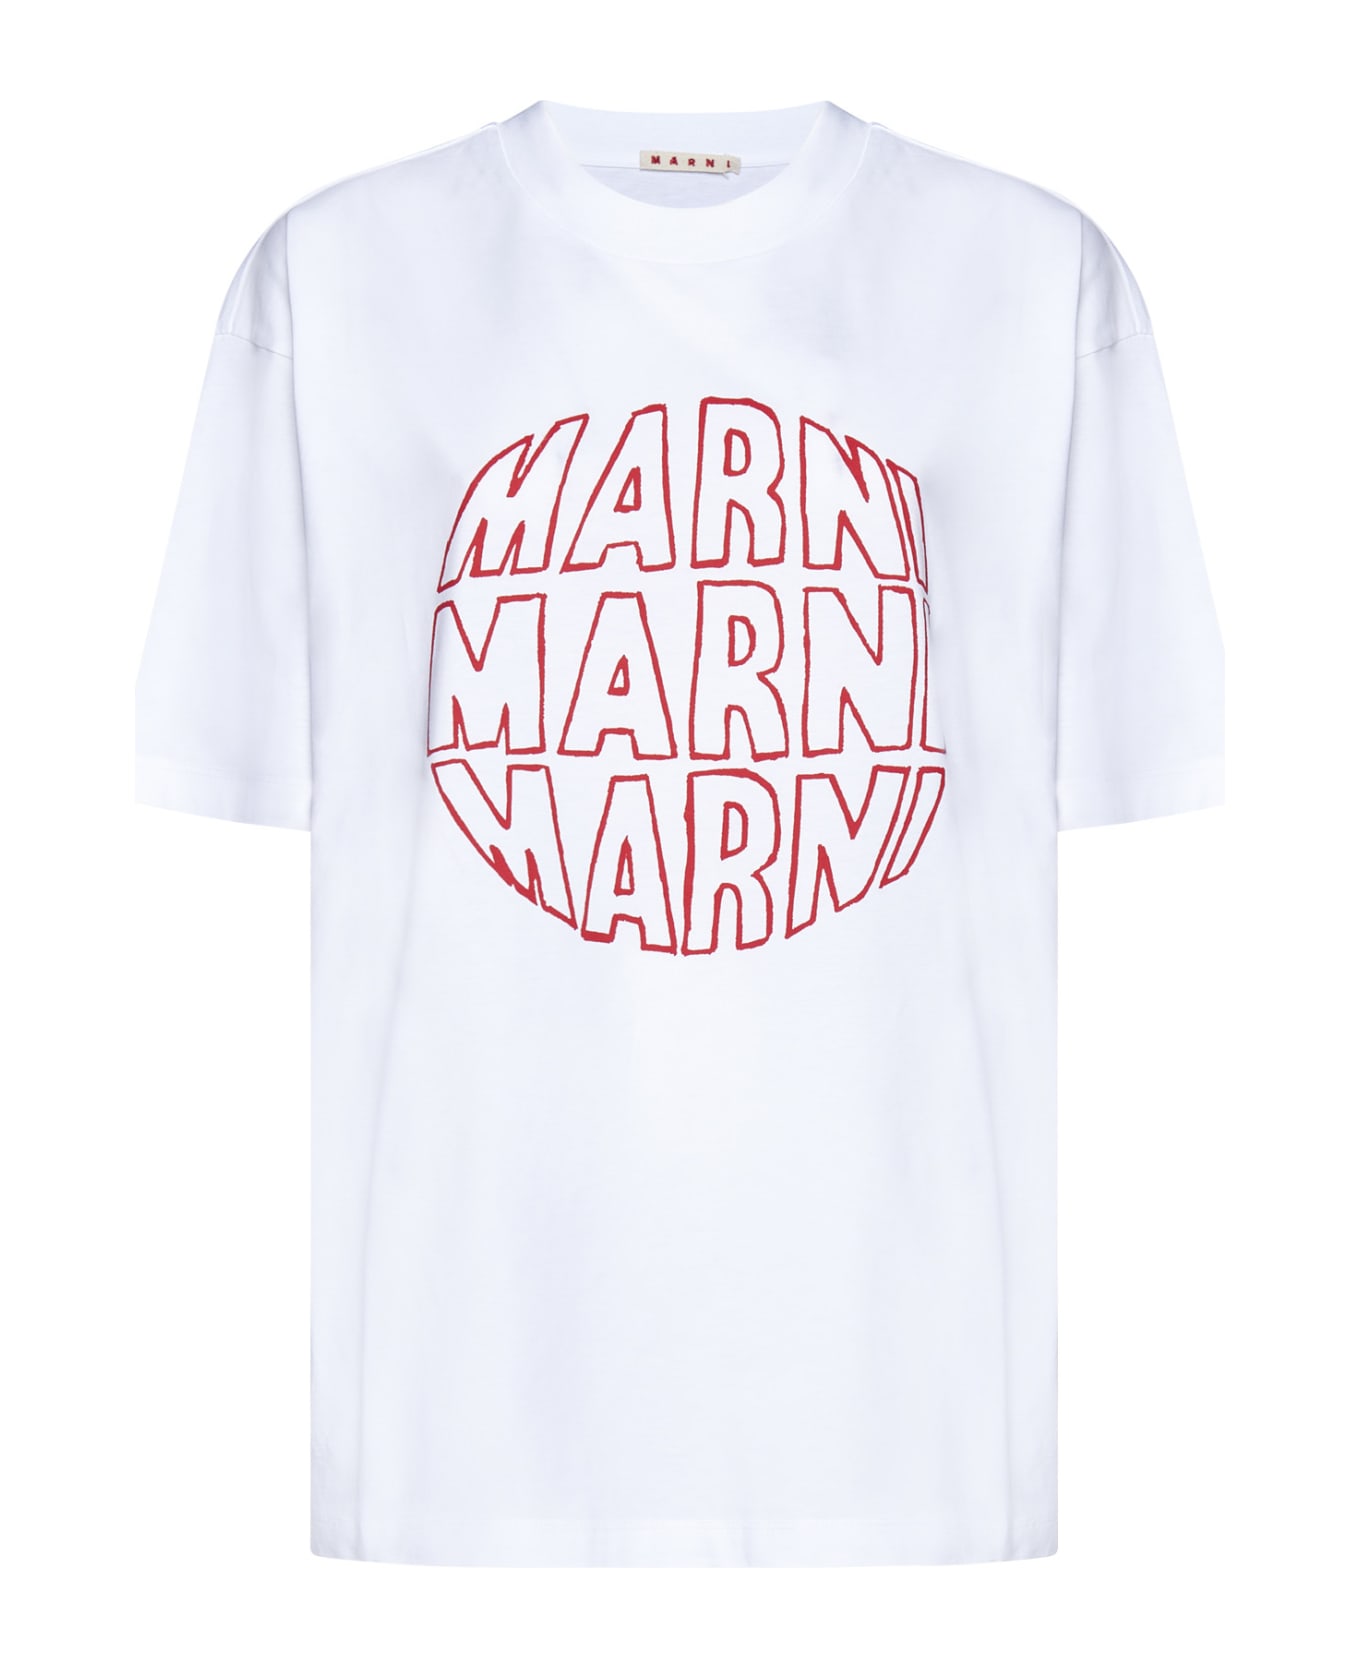 Marni White Cotton T-shirt - CLW01